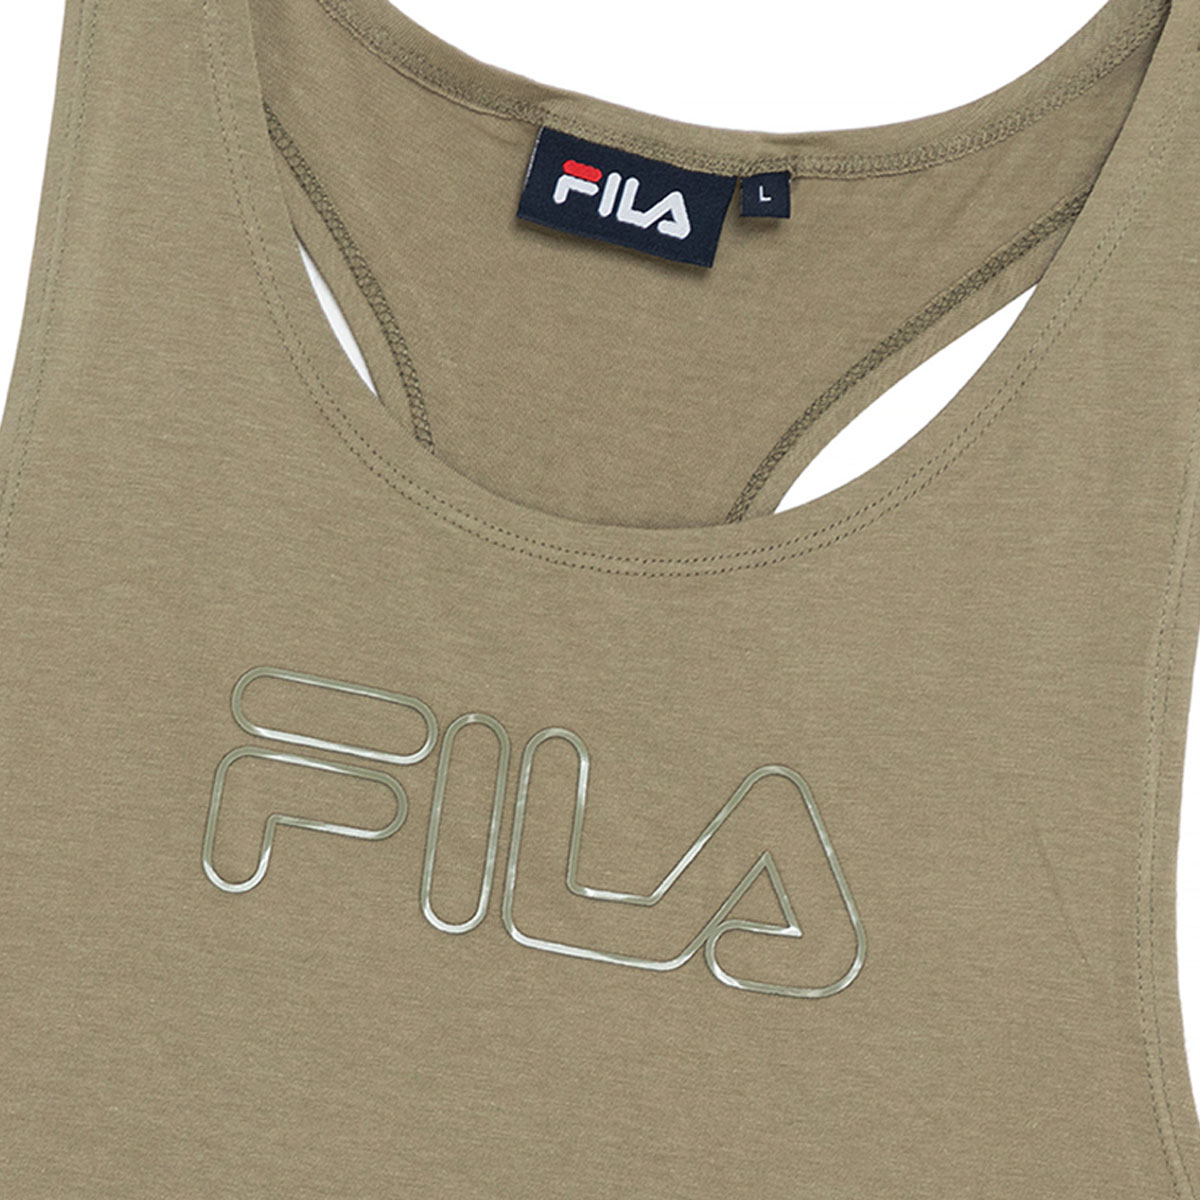 FILA Women's Quill WS Loose Tank Tops